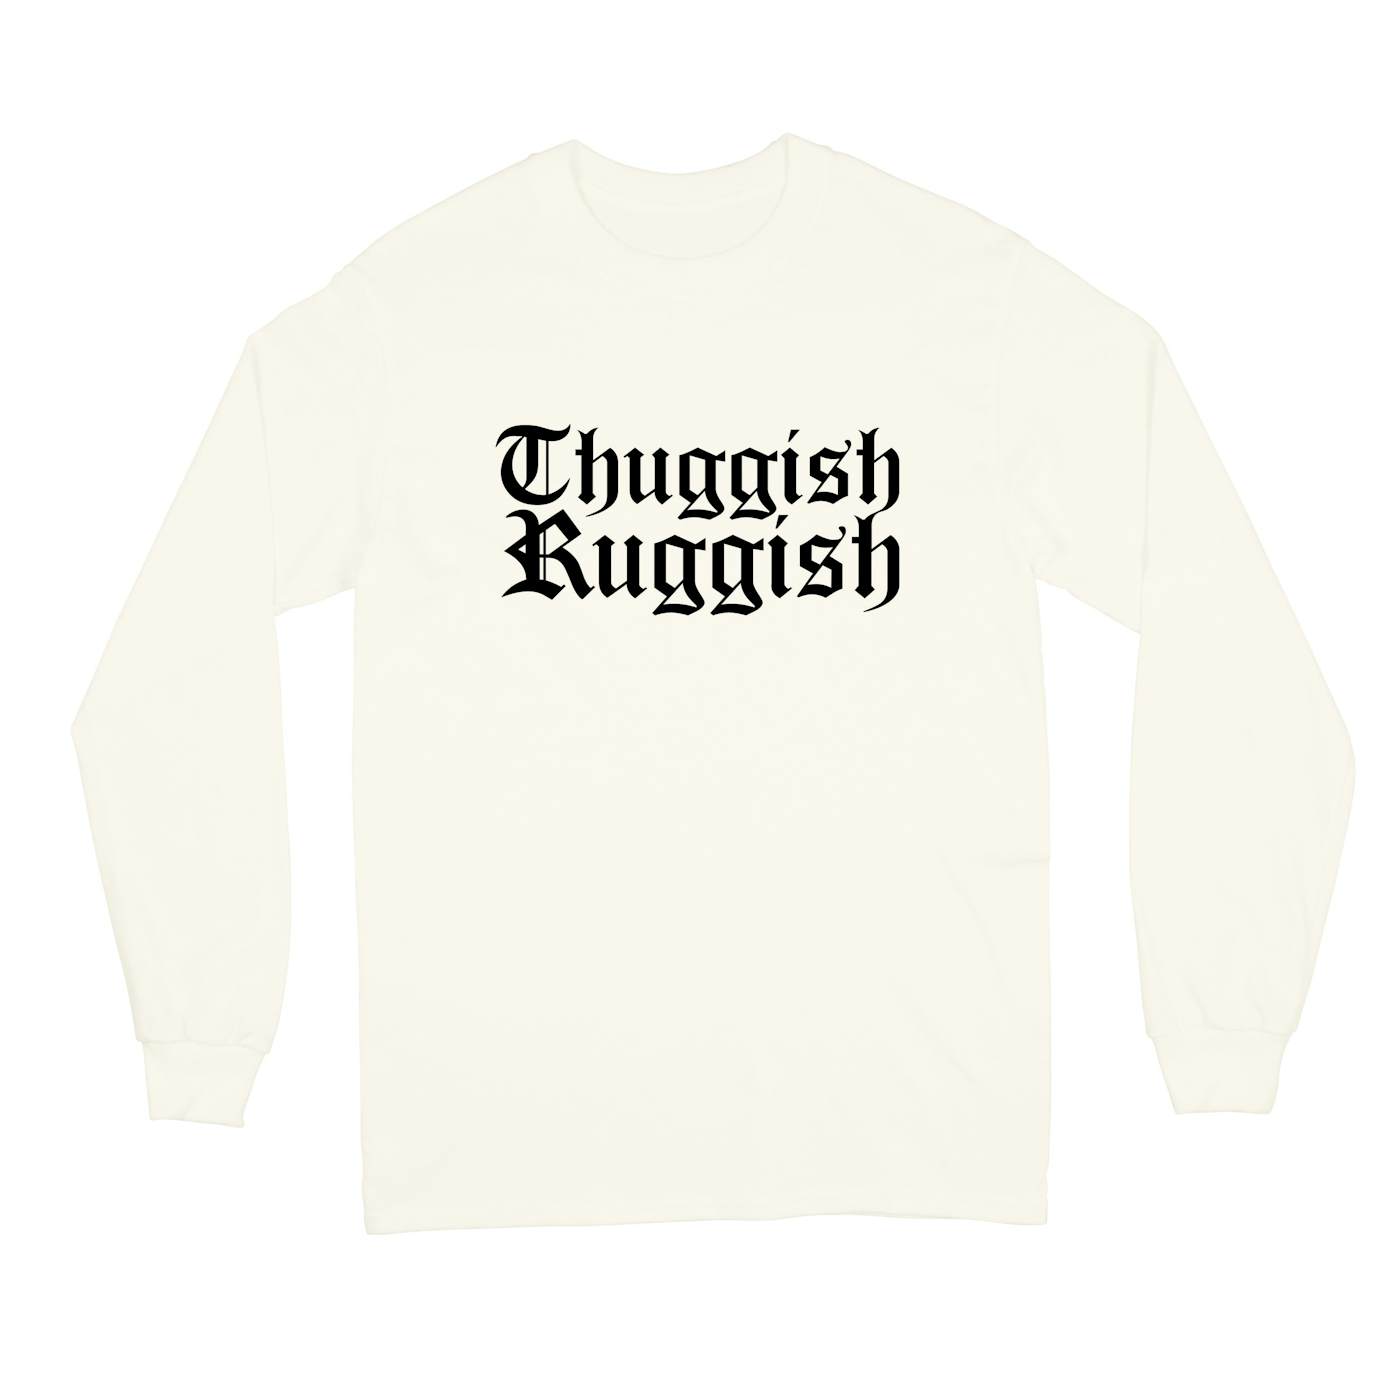 Bone Thugs-N-Harmony Thuggish Ruggish Black Logo "Cream" Long Sleeve